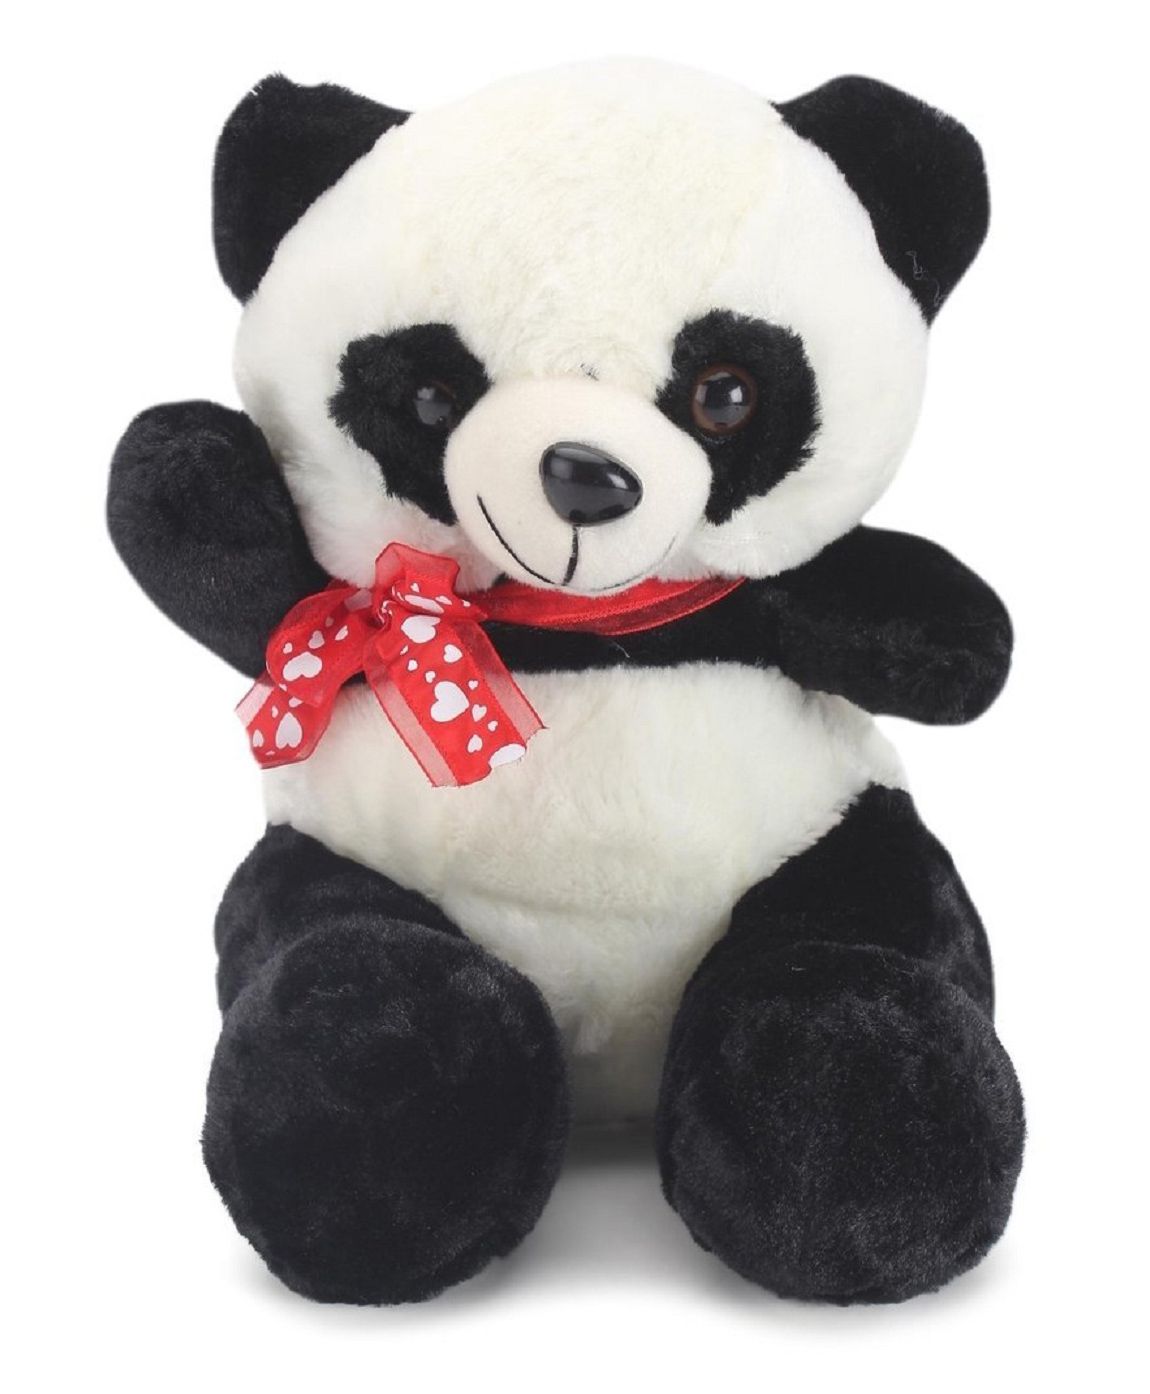 Buy panda. Bear and Panda игрушки. Игрушка Панда на батарейках. Оранжевая Панда игрушка. Панда Teddy.